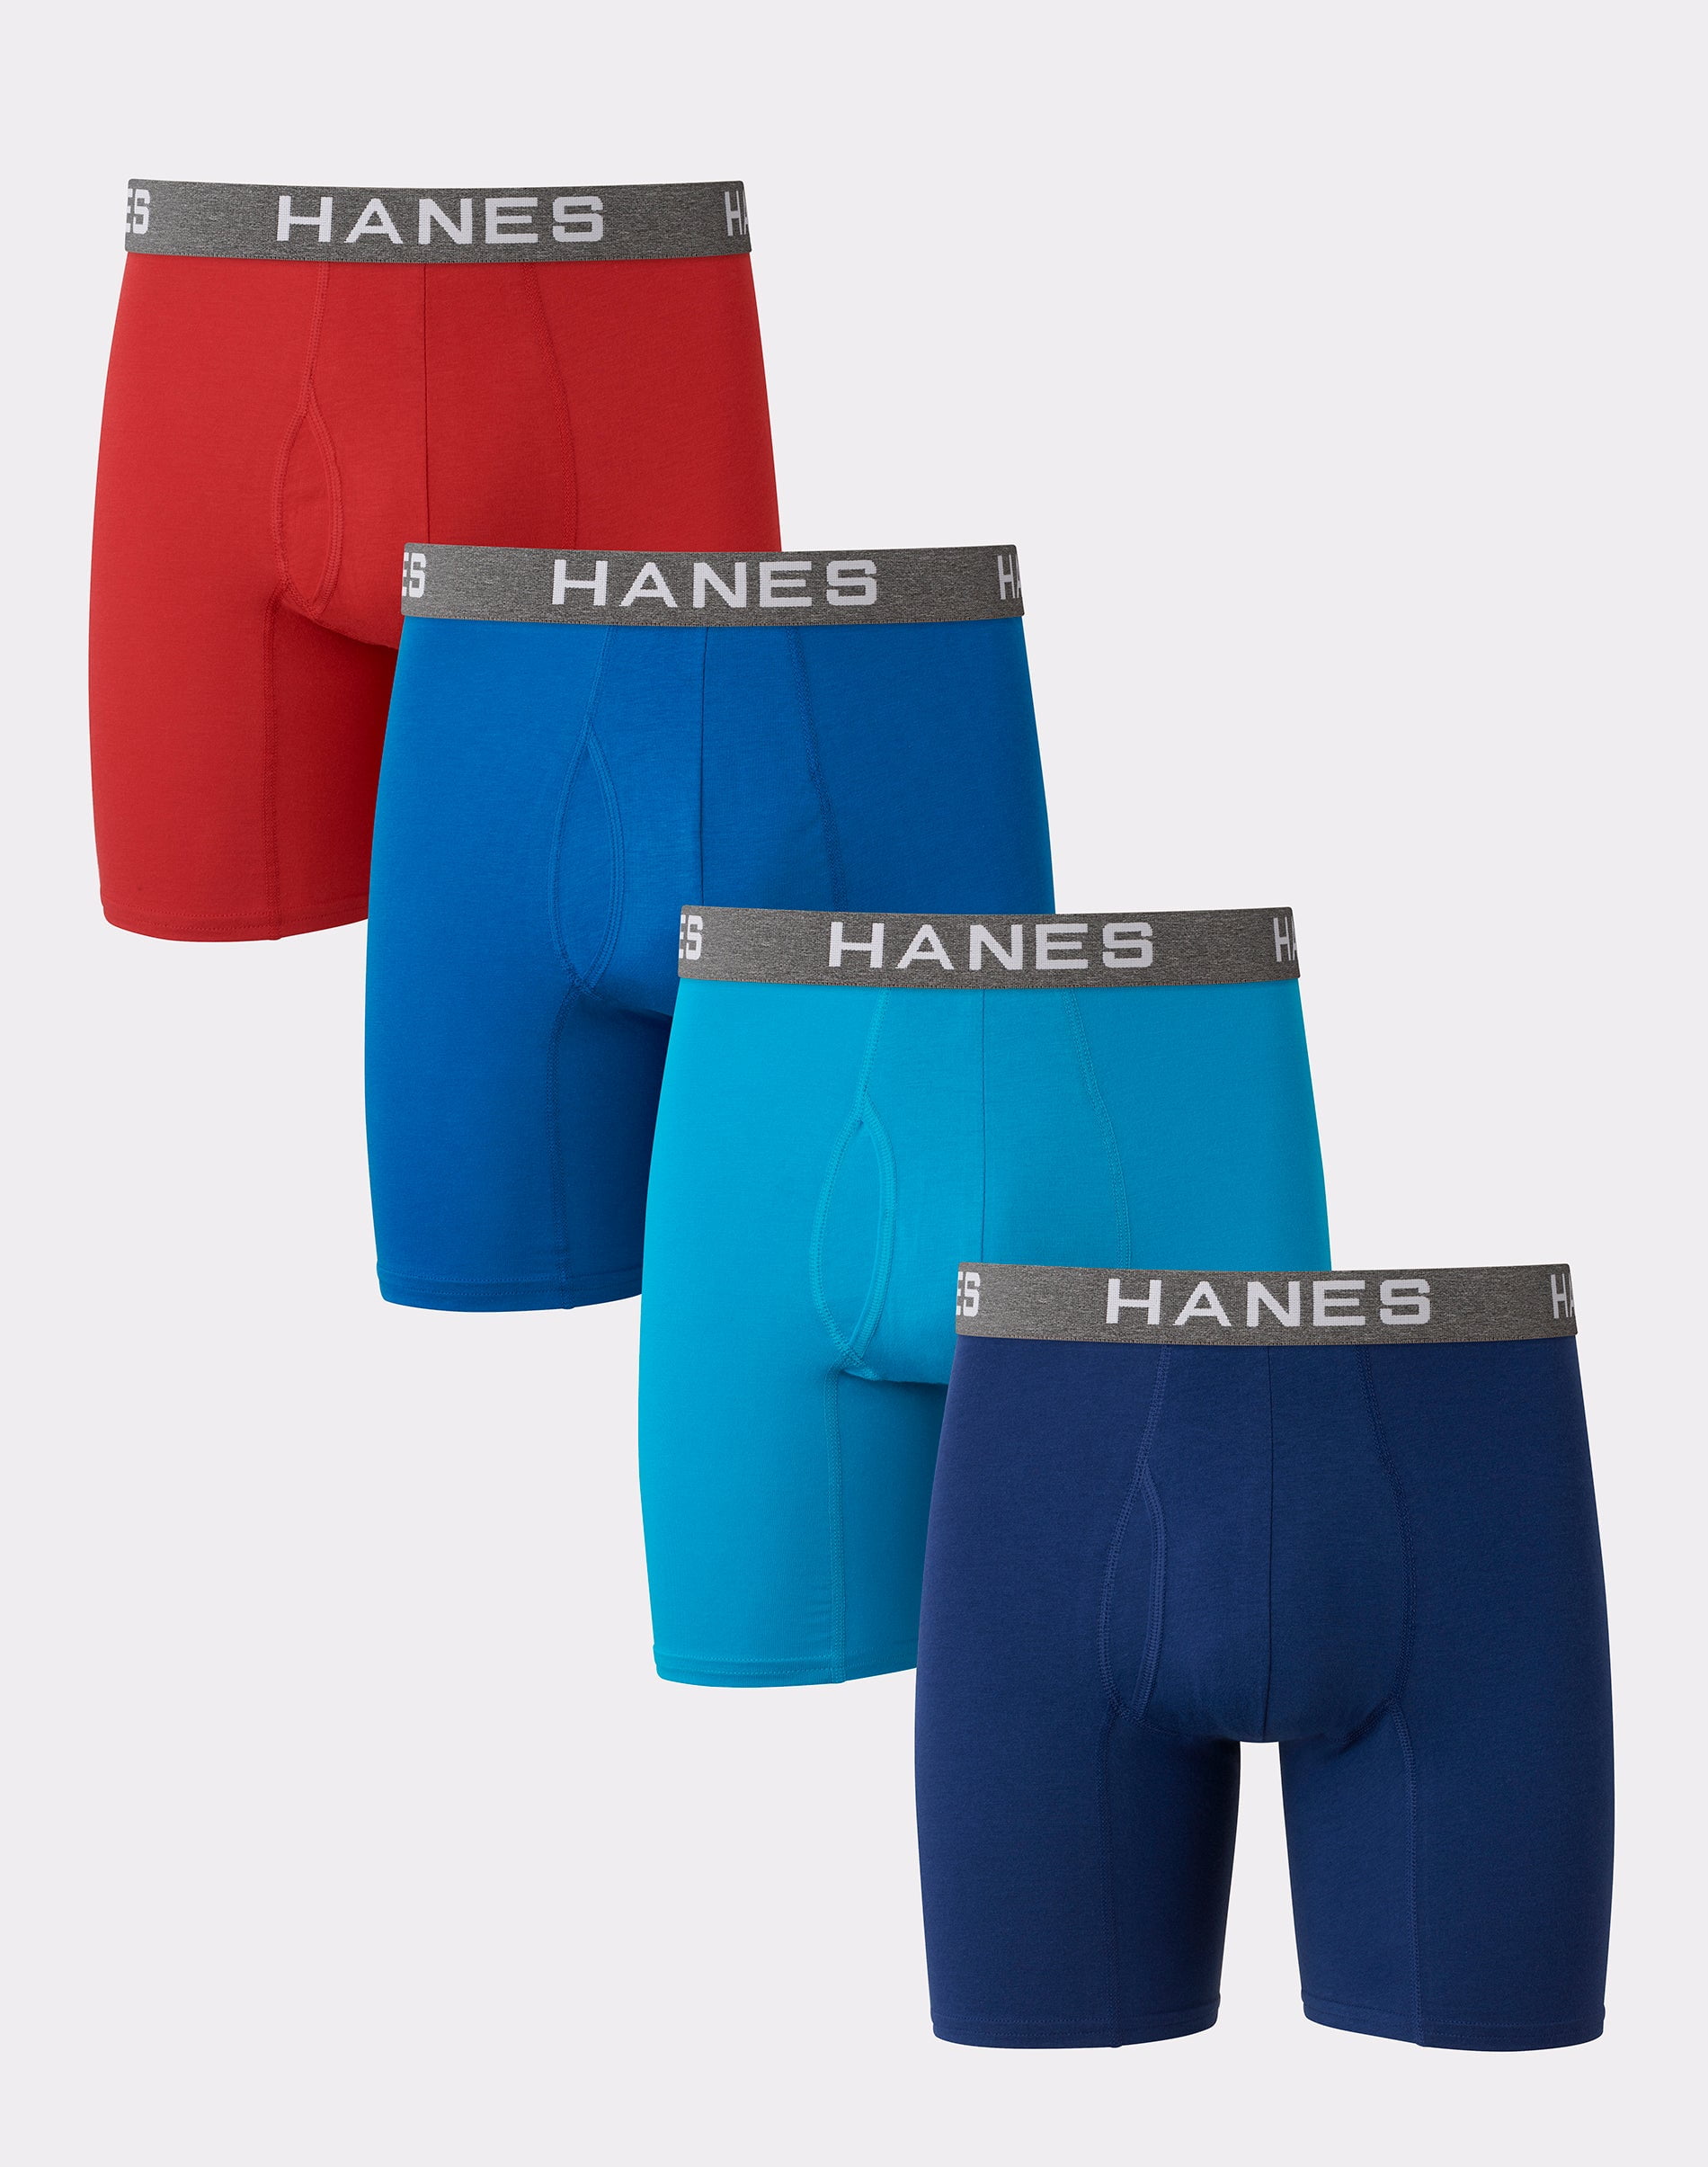 Hanes Ultimate Comfort Flex Fit Men's Boxer Brief Underwear, Red